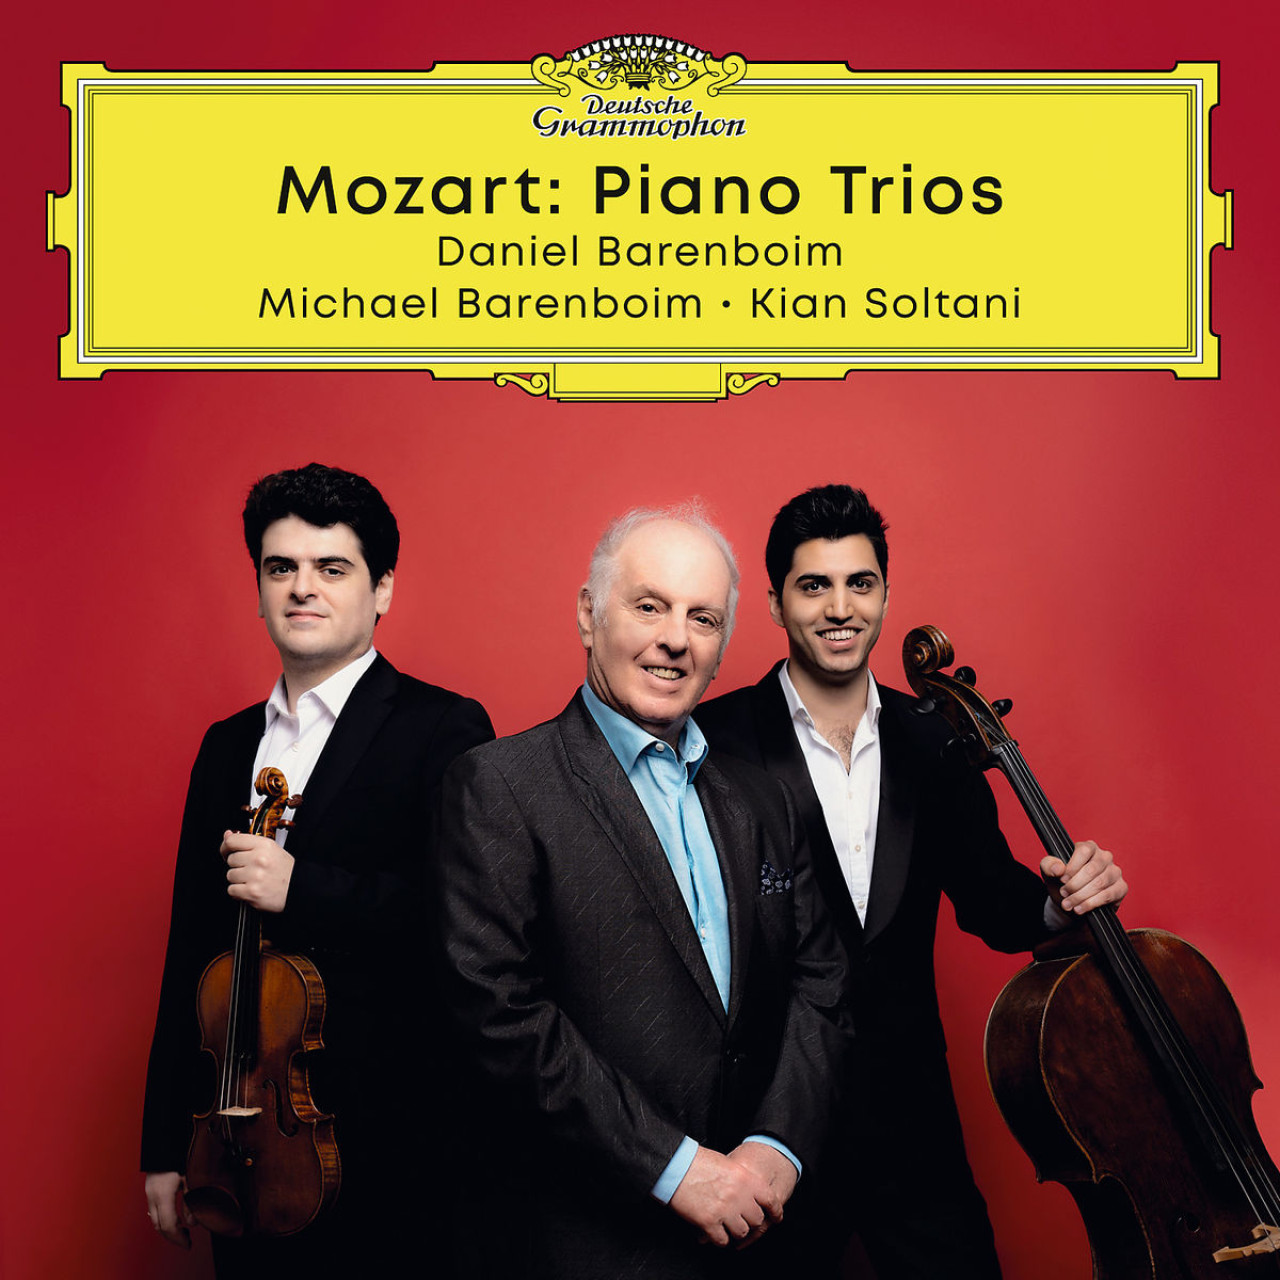 MOZART Piano Trios / Barenboim | Deutsche Grammophon